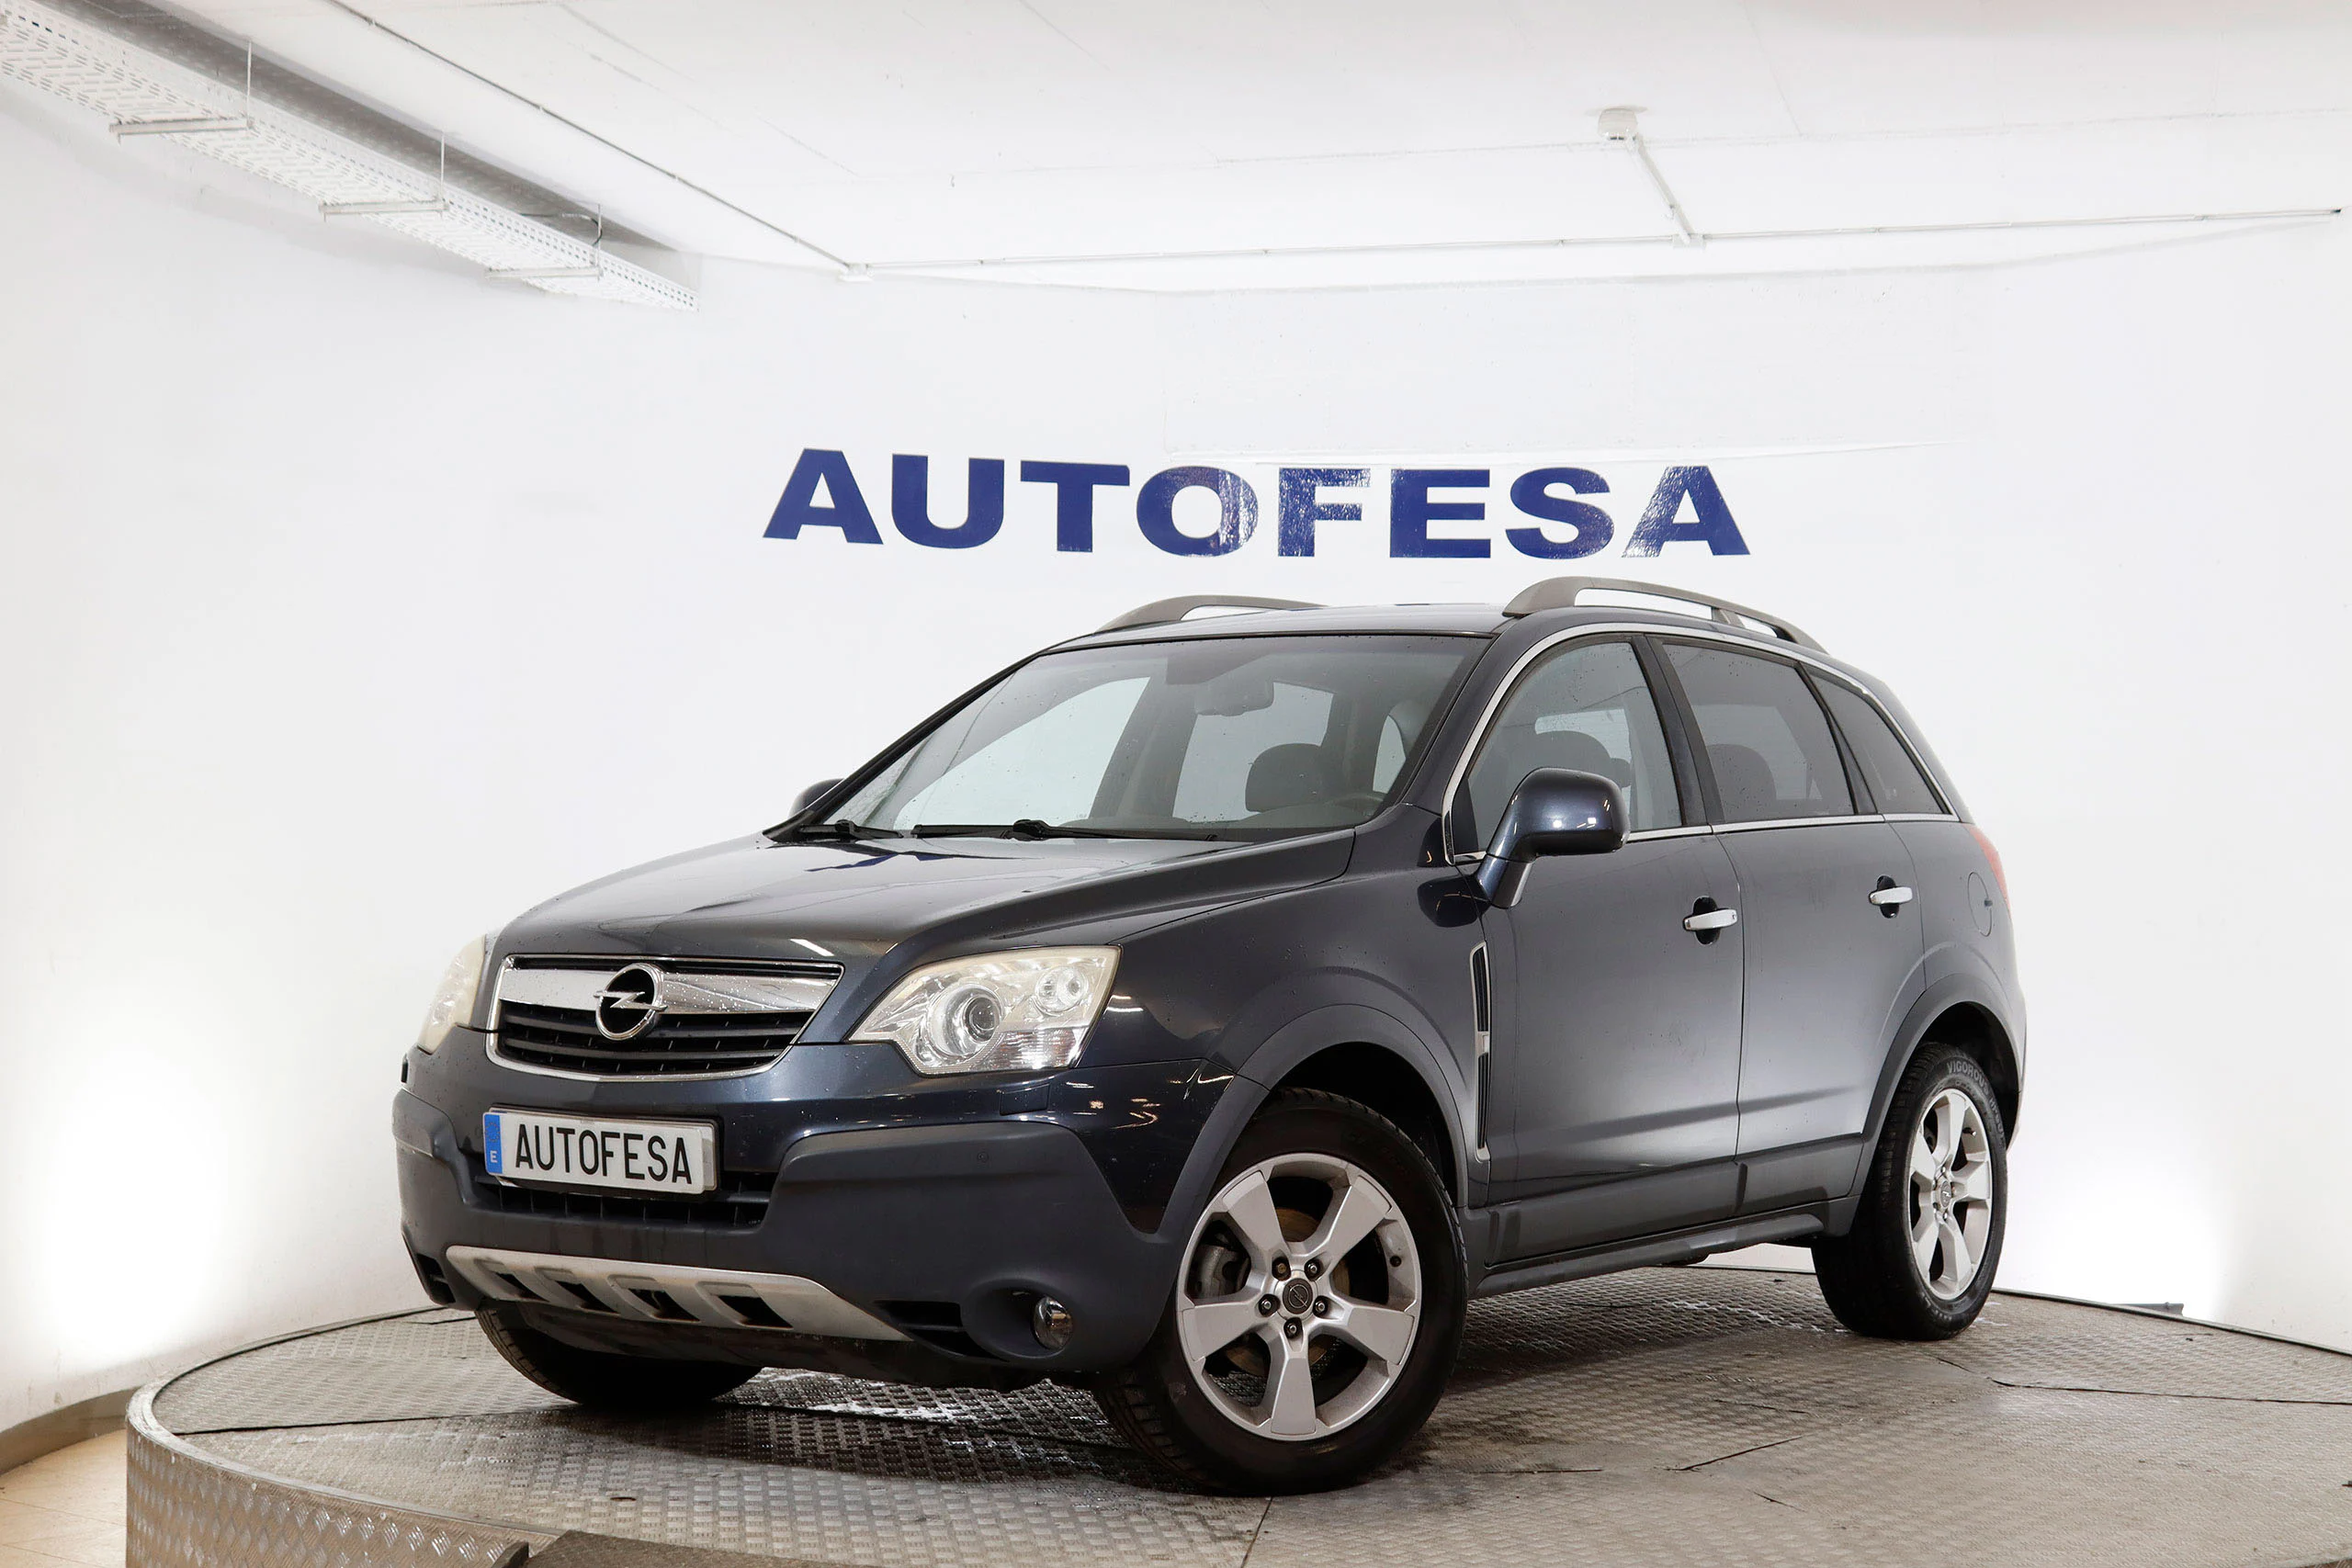 Opel Antara 2.0 CDTI 4X4 150cv 5P # CUERO, BIXENON, BOLA REMOLQUE - Foto 1